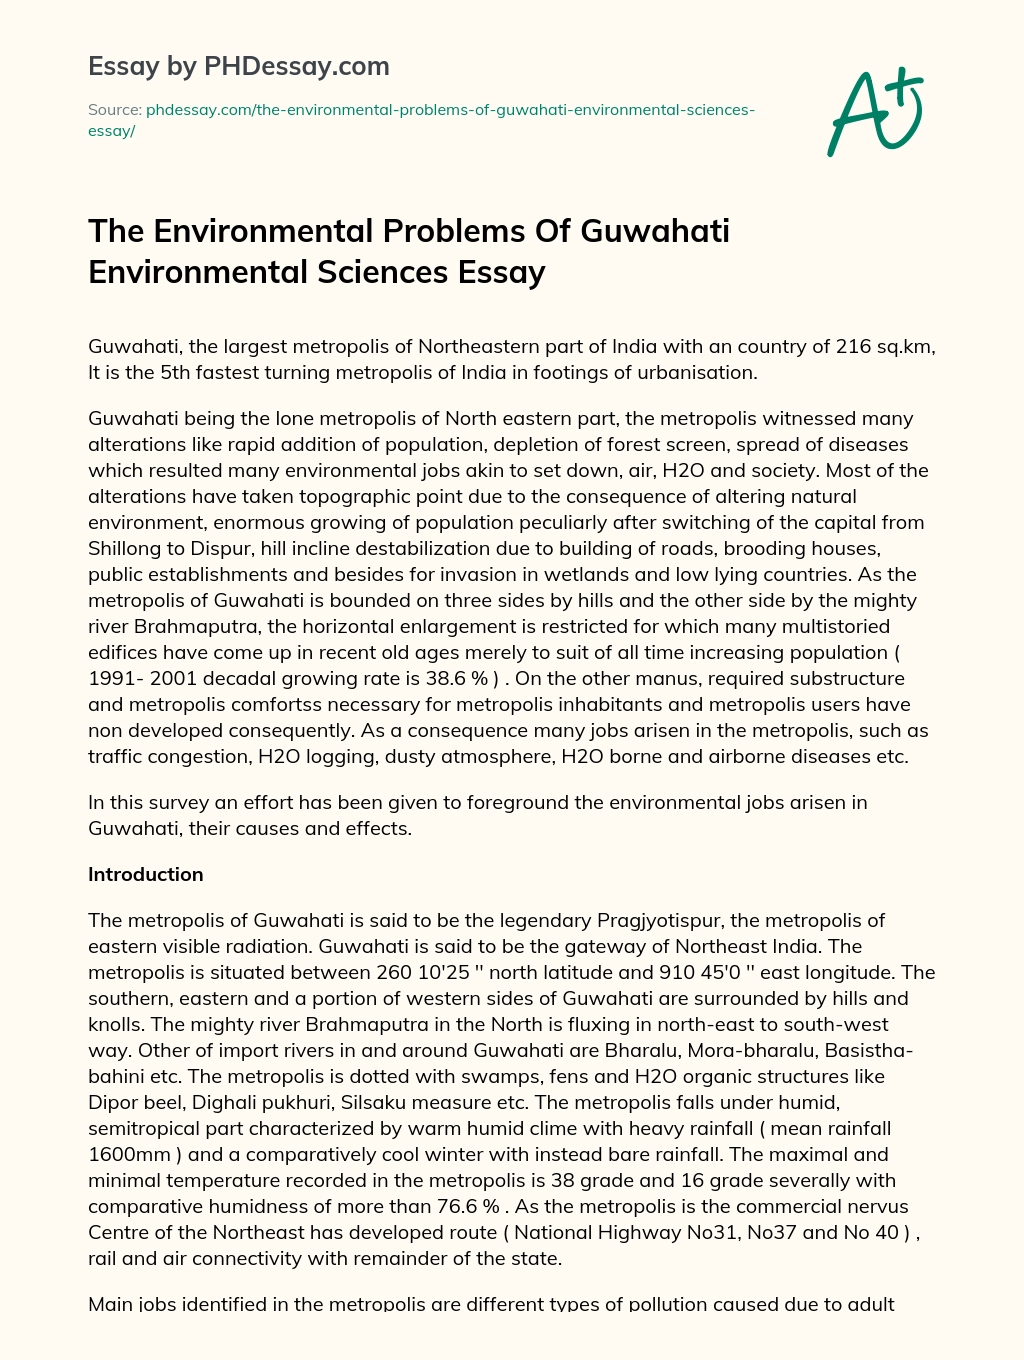 The Environmental Problems Of Guwahati Environmental Sciences Essay essay